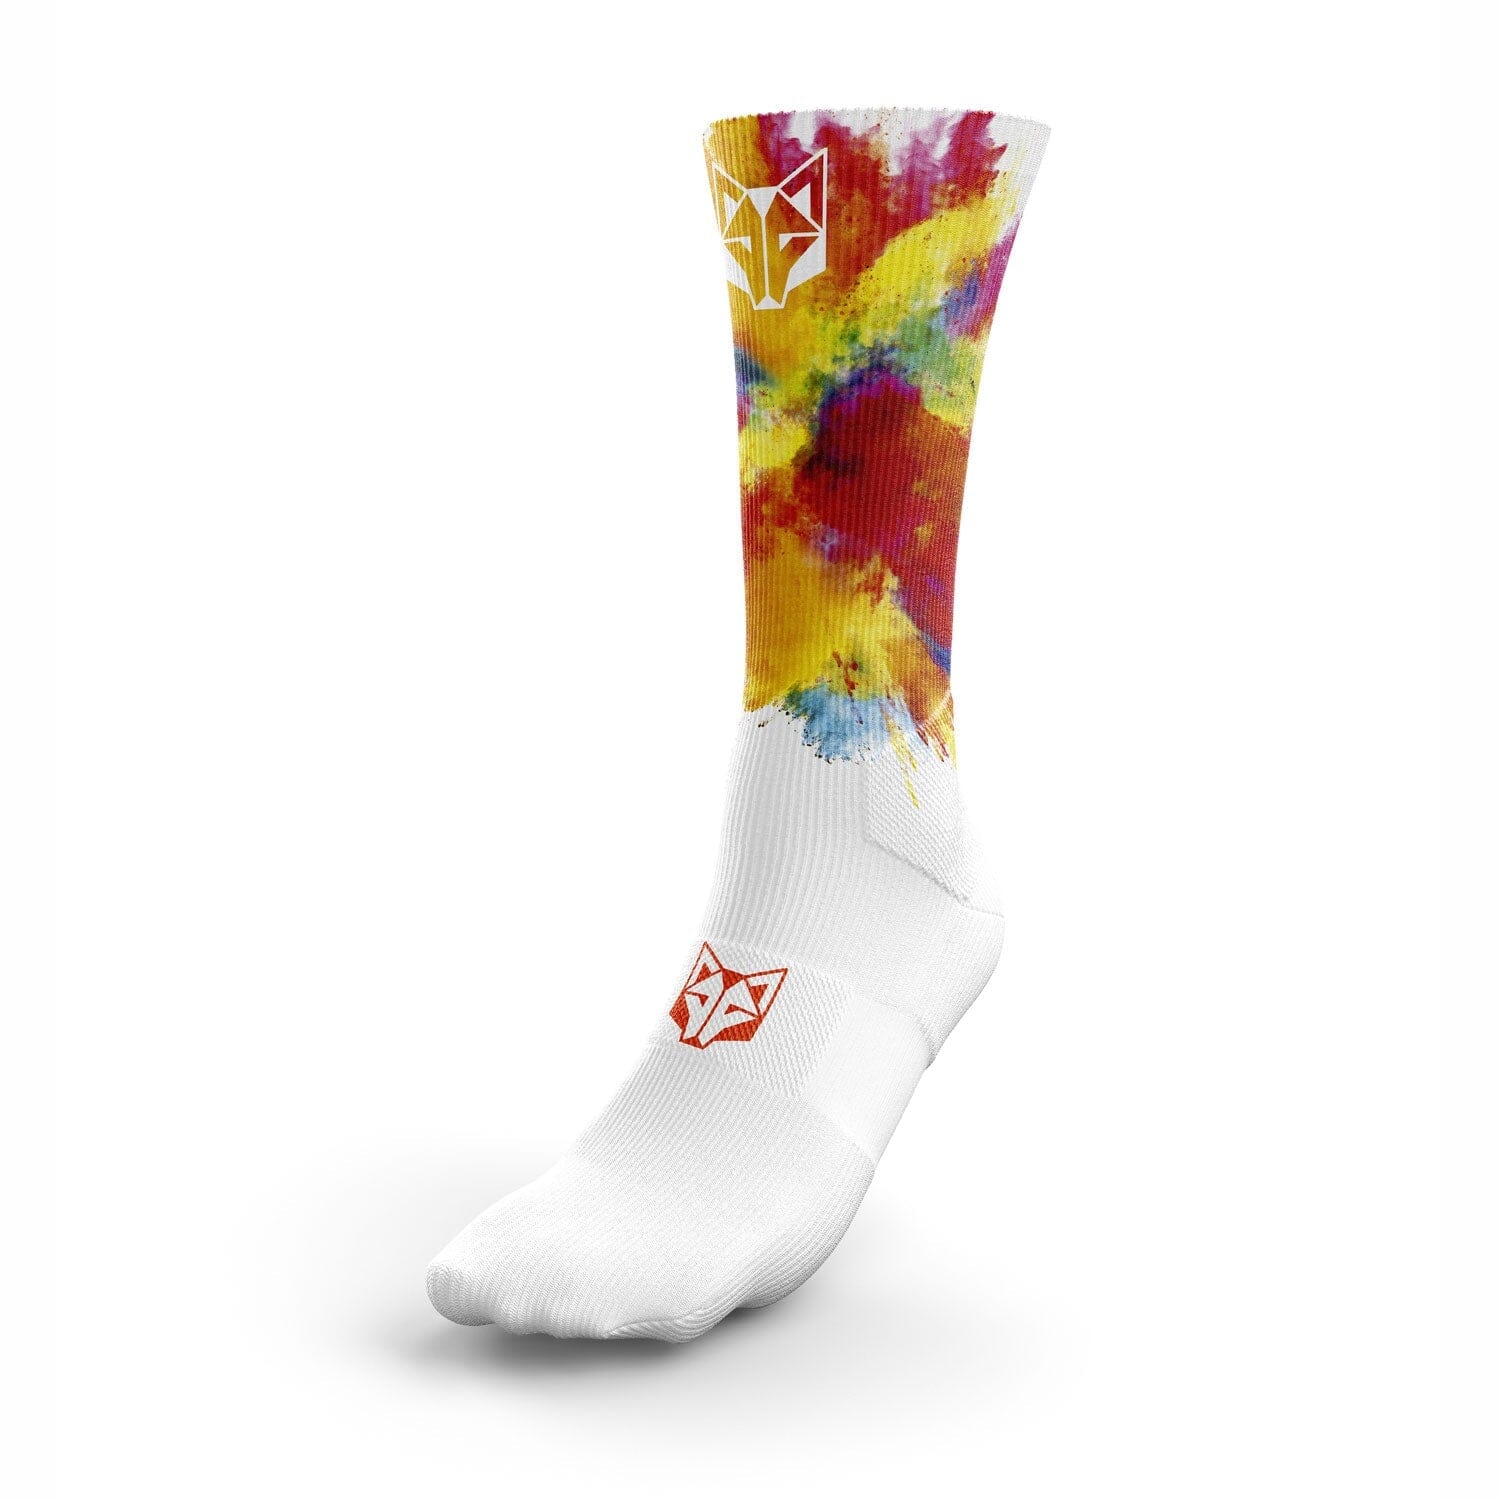 OTSO Multisport Socks High Cut Colors M 